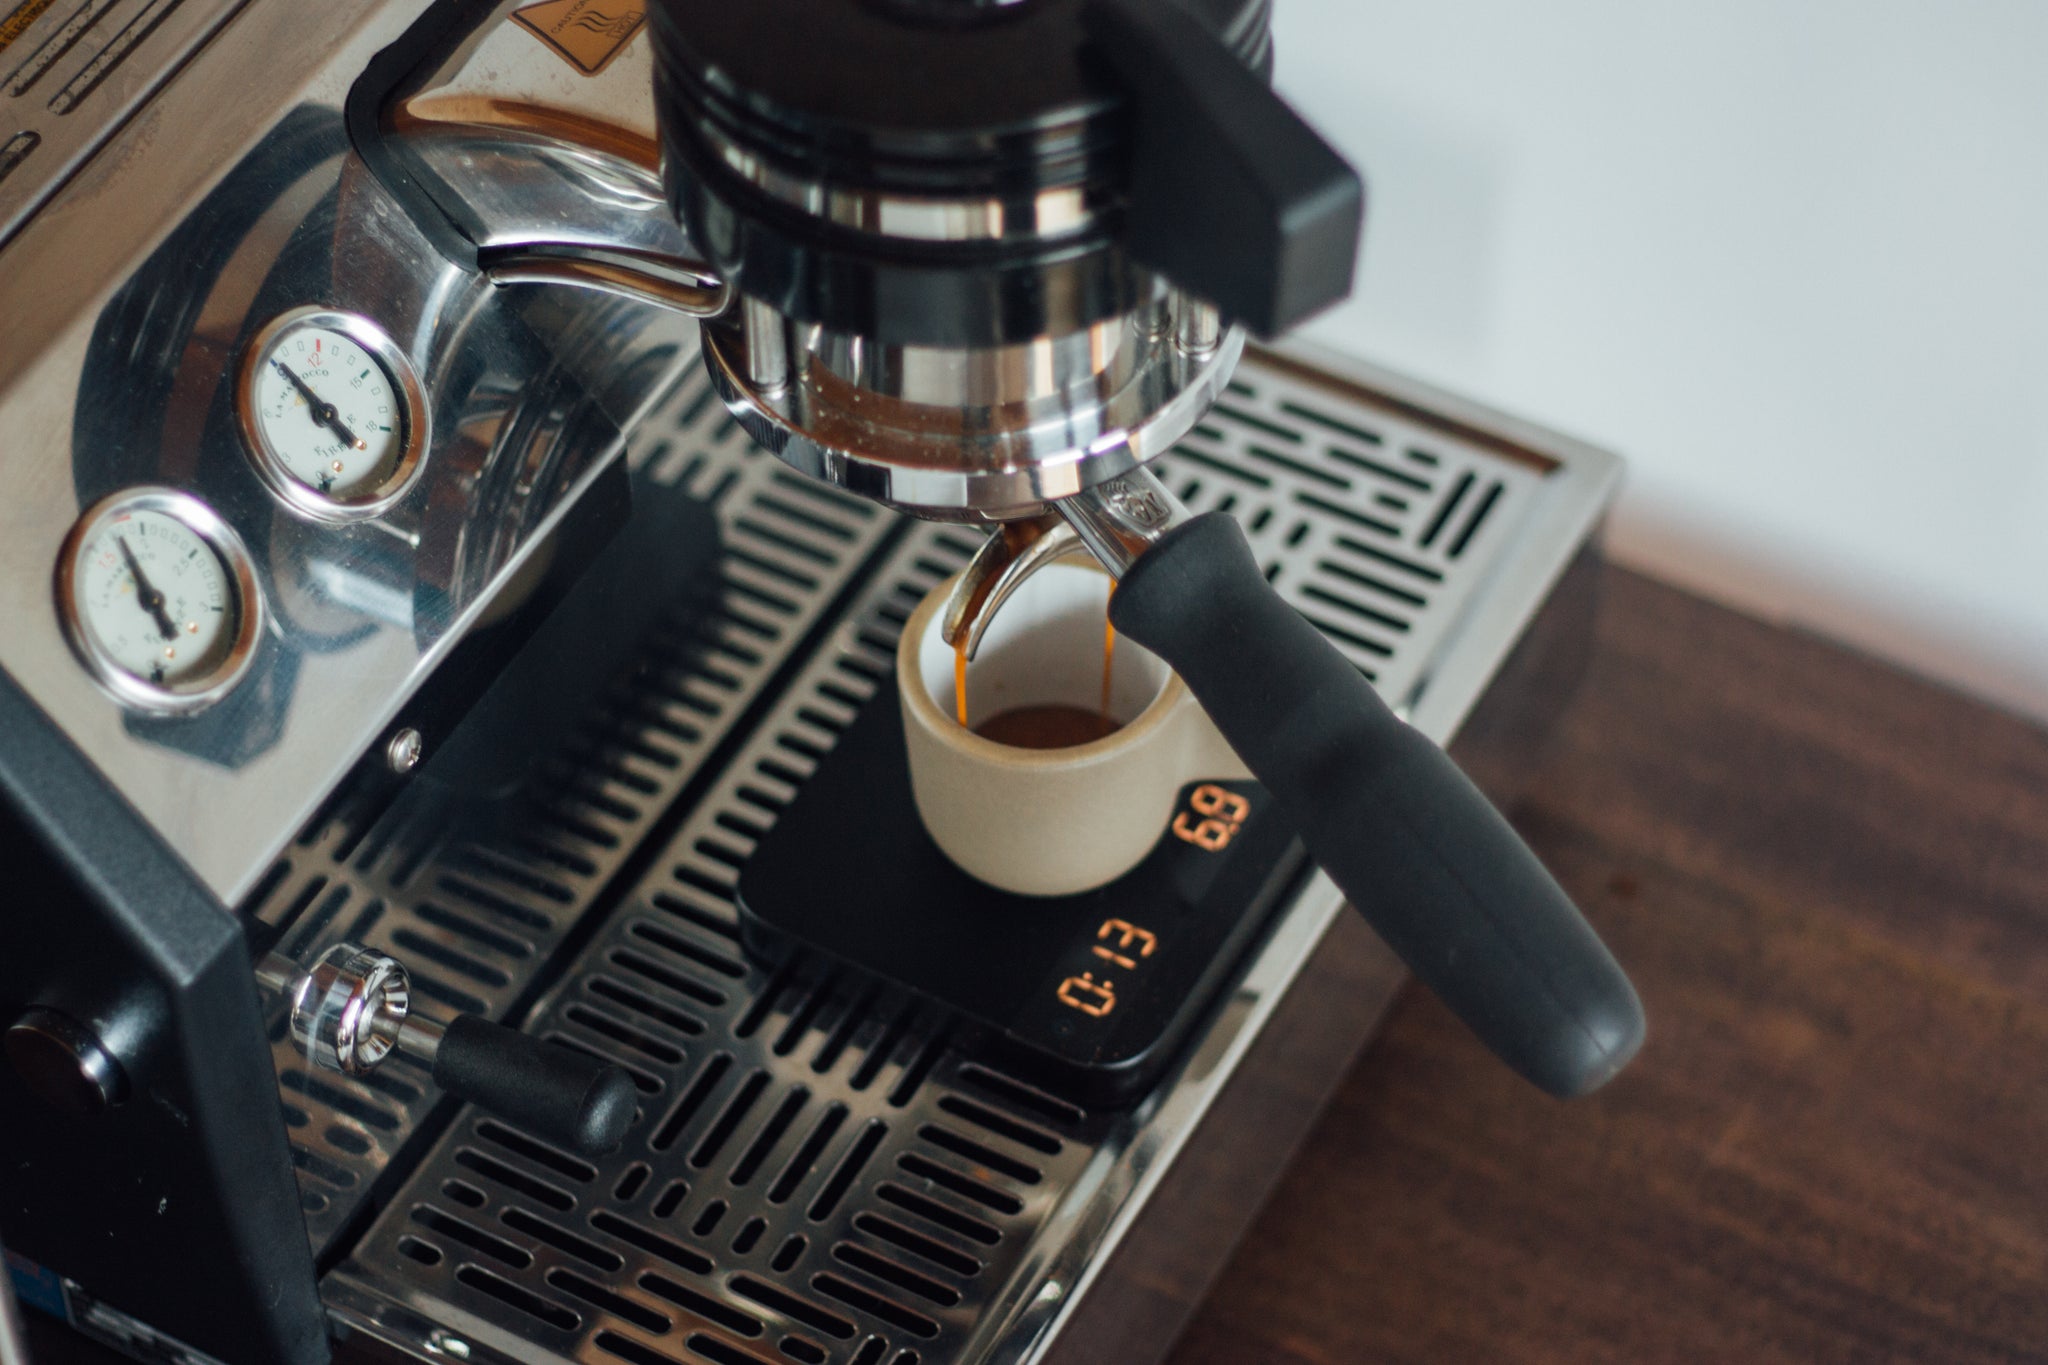 Acaia Lunar Espresso Scale – Mauch Chunk Coffee Co.